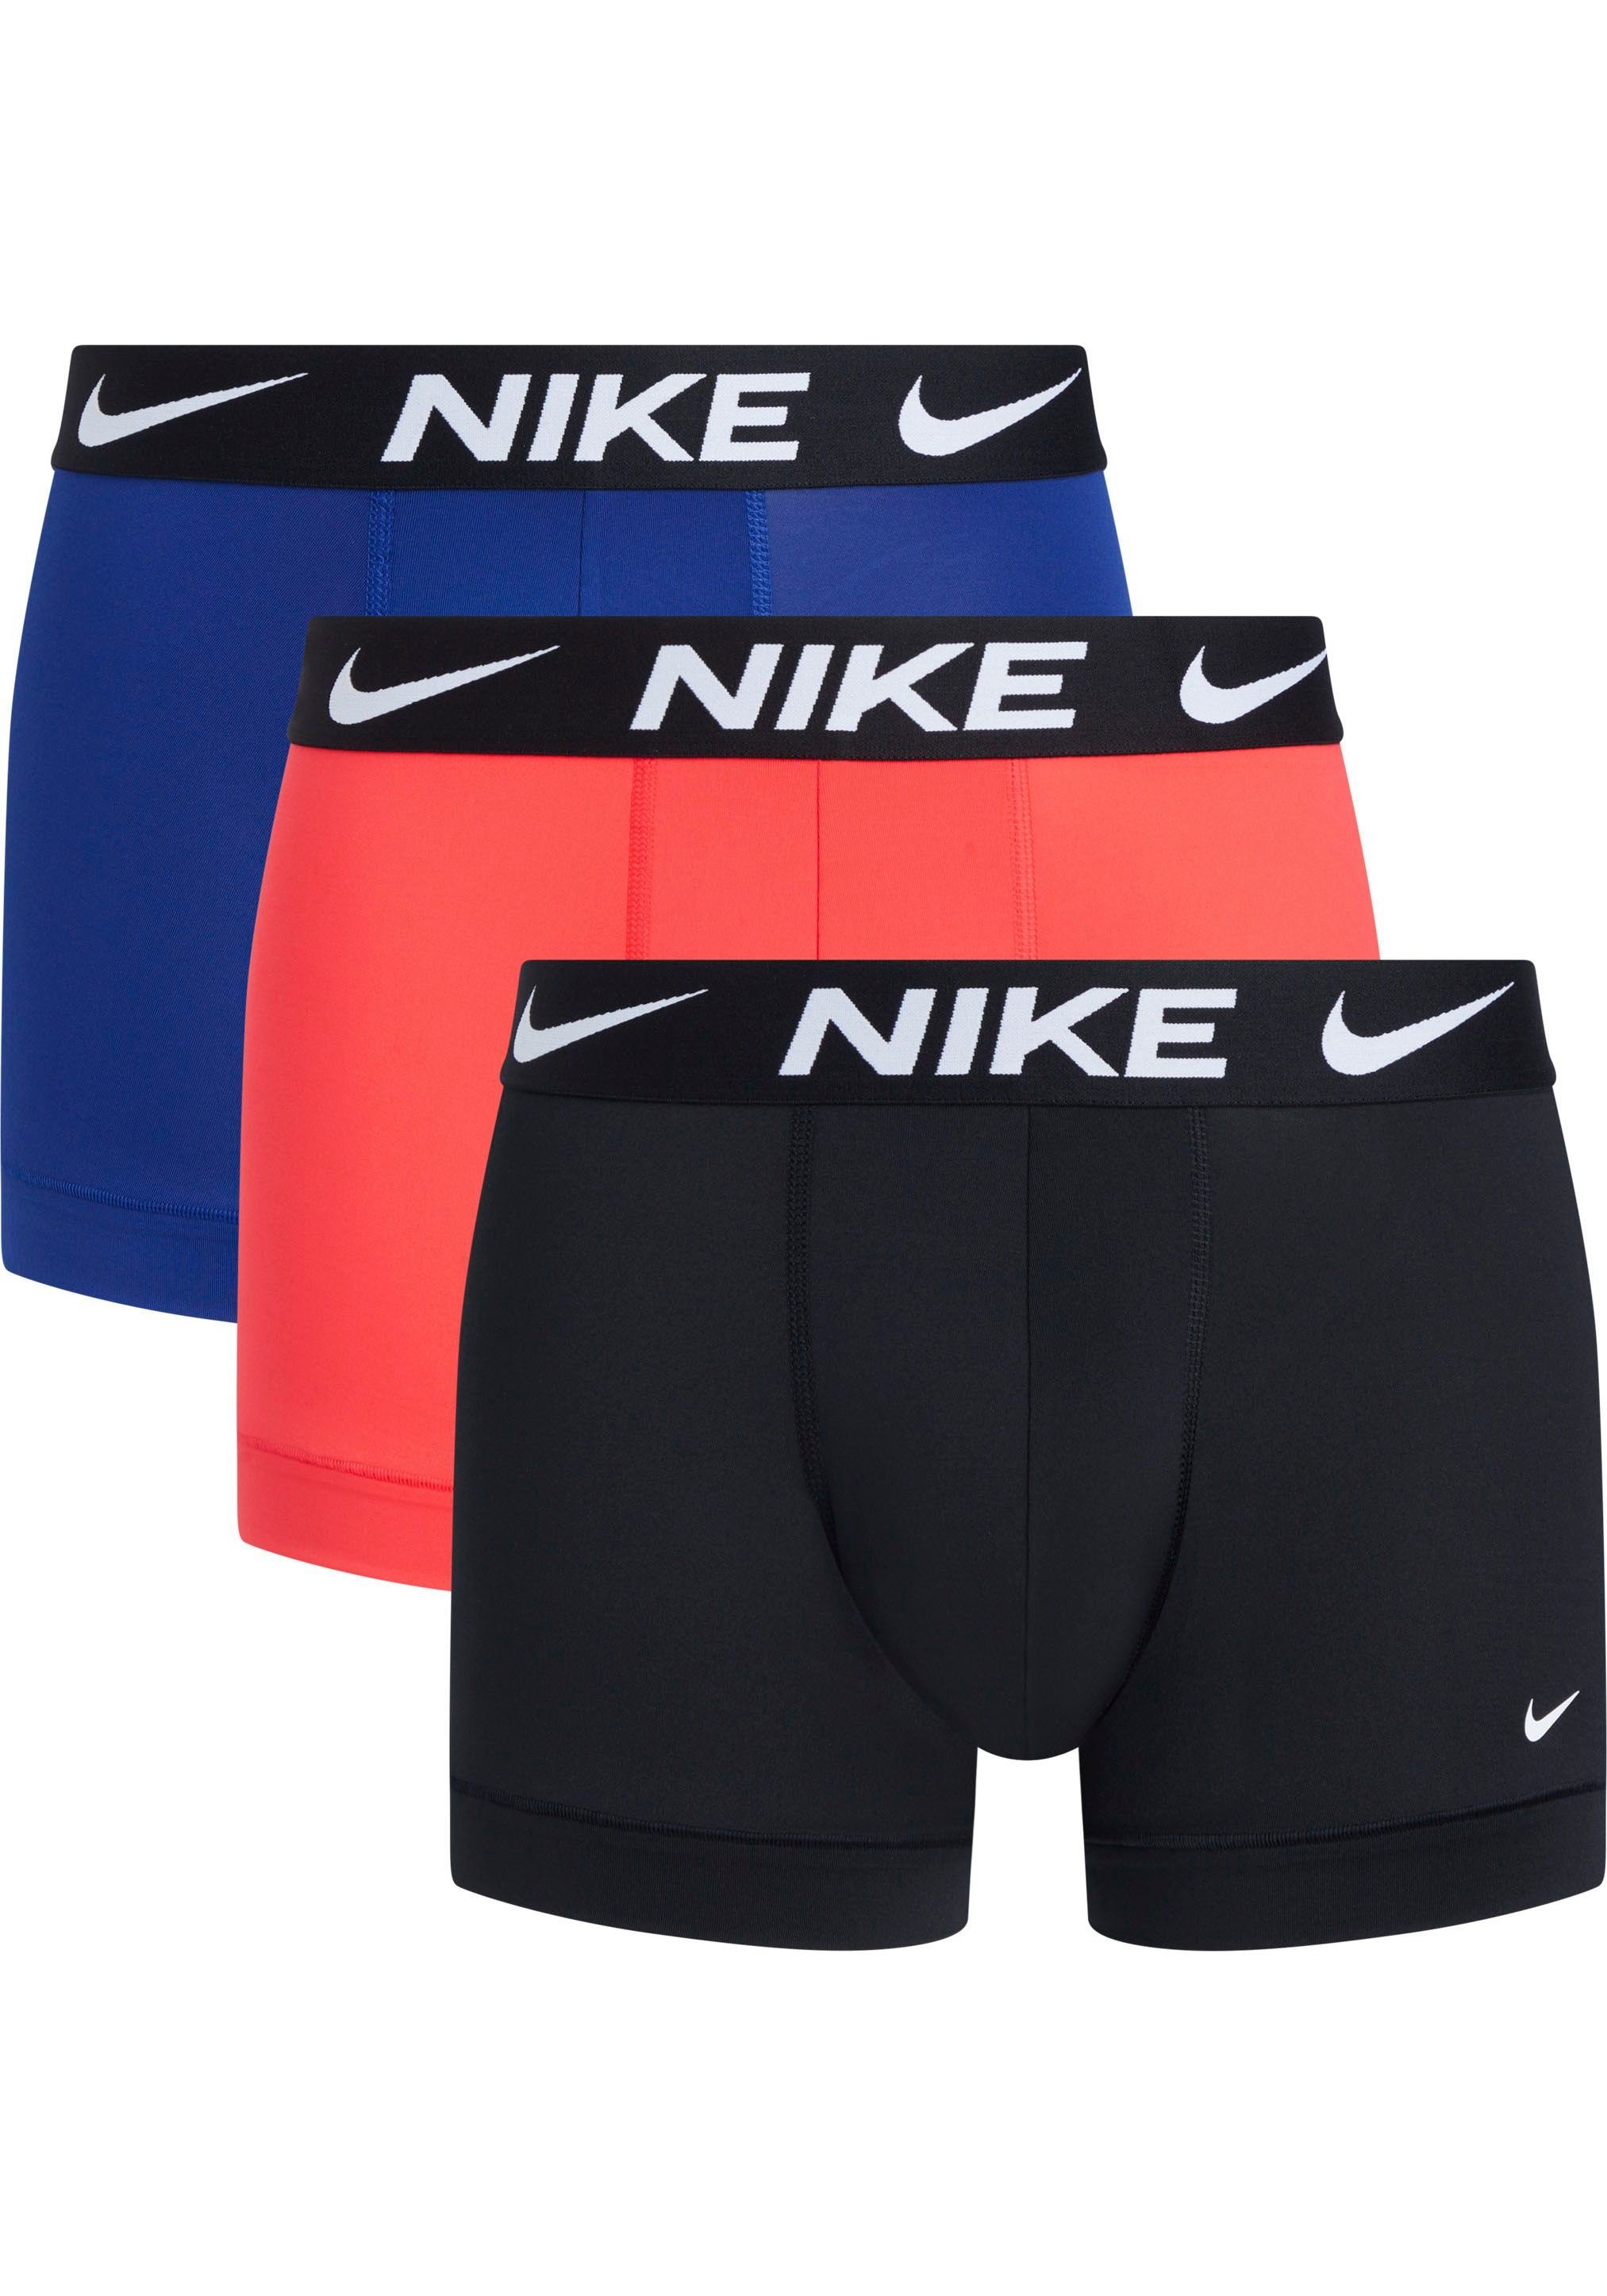 NIKE Underwear Trunk TRUNK 3PK (Packung, 3er-Pack) mit NIKE Logo-Elastikbund (3 Stück) SIREN_RED/_DEEP_ROYAL/_BLACK